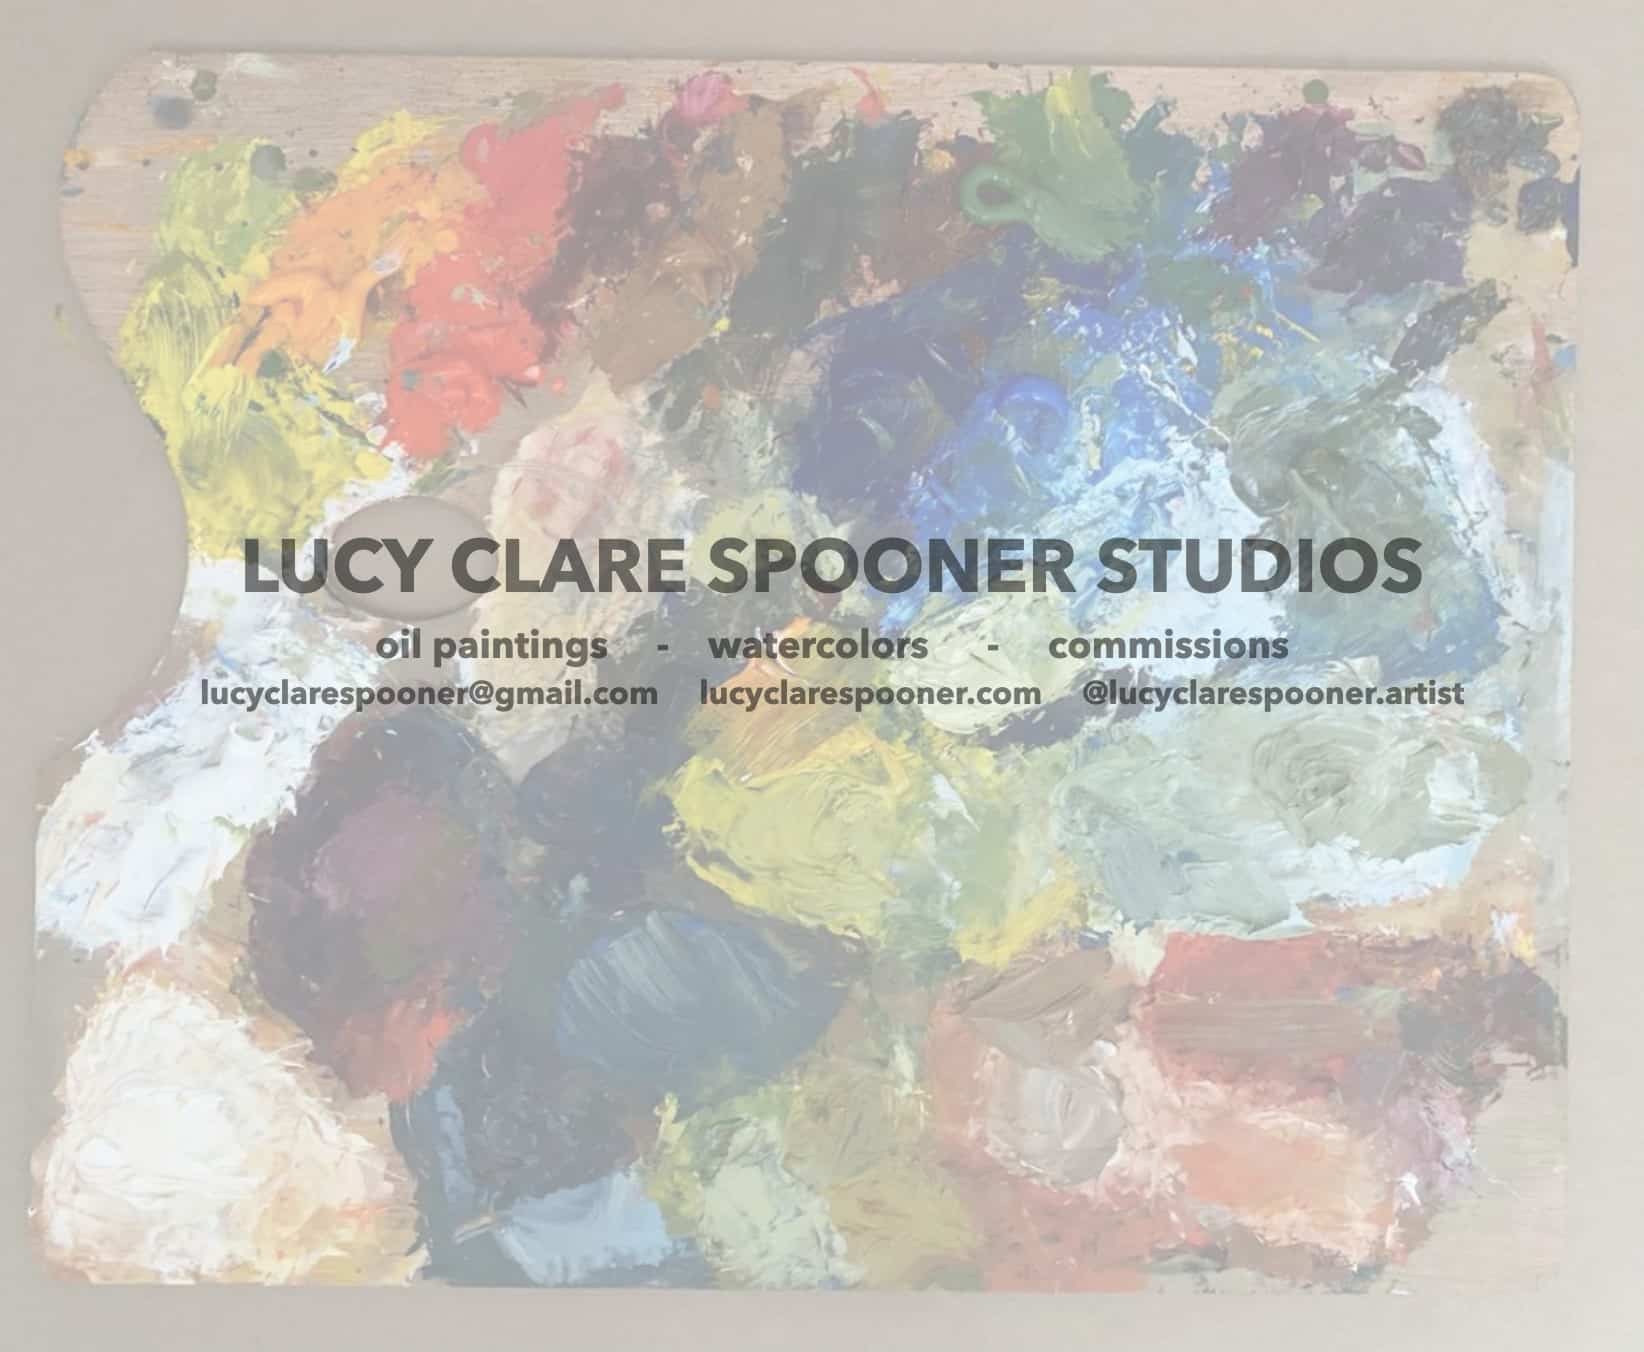 Lucy Clare Spooner